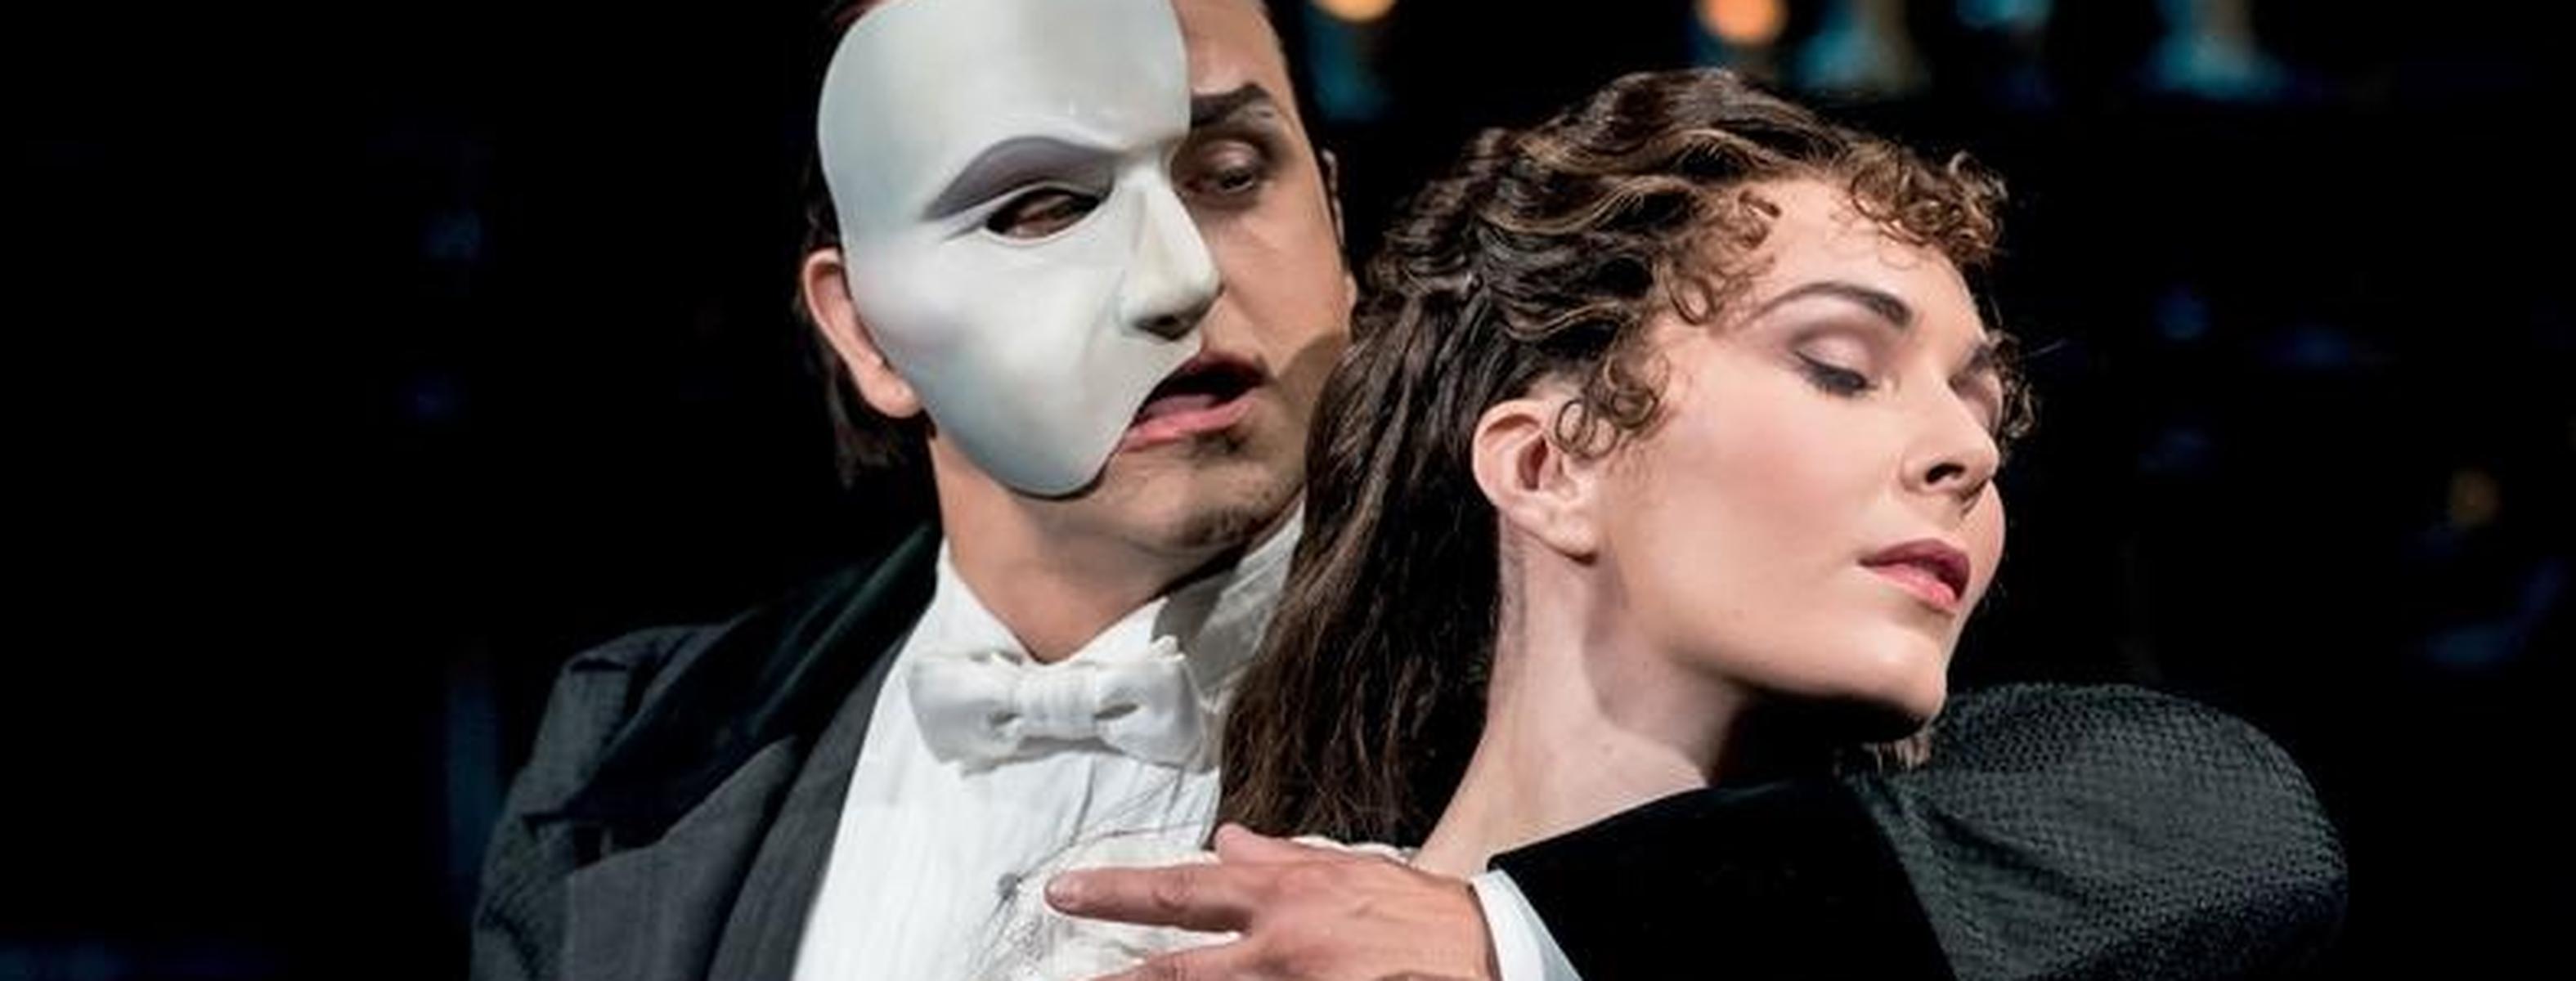 phantom of the opera article